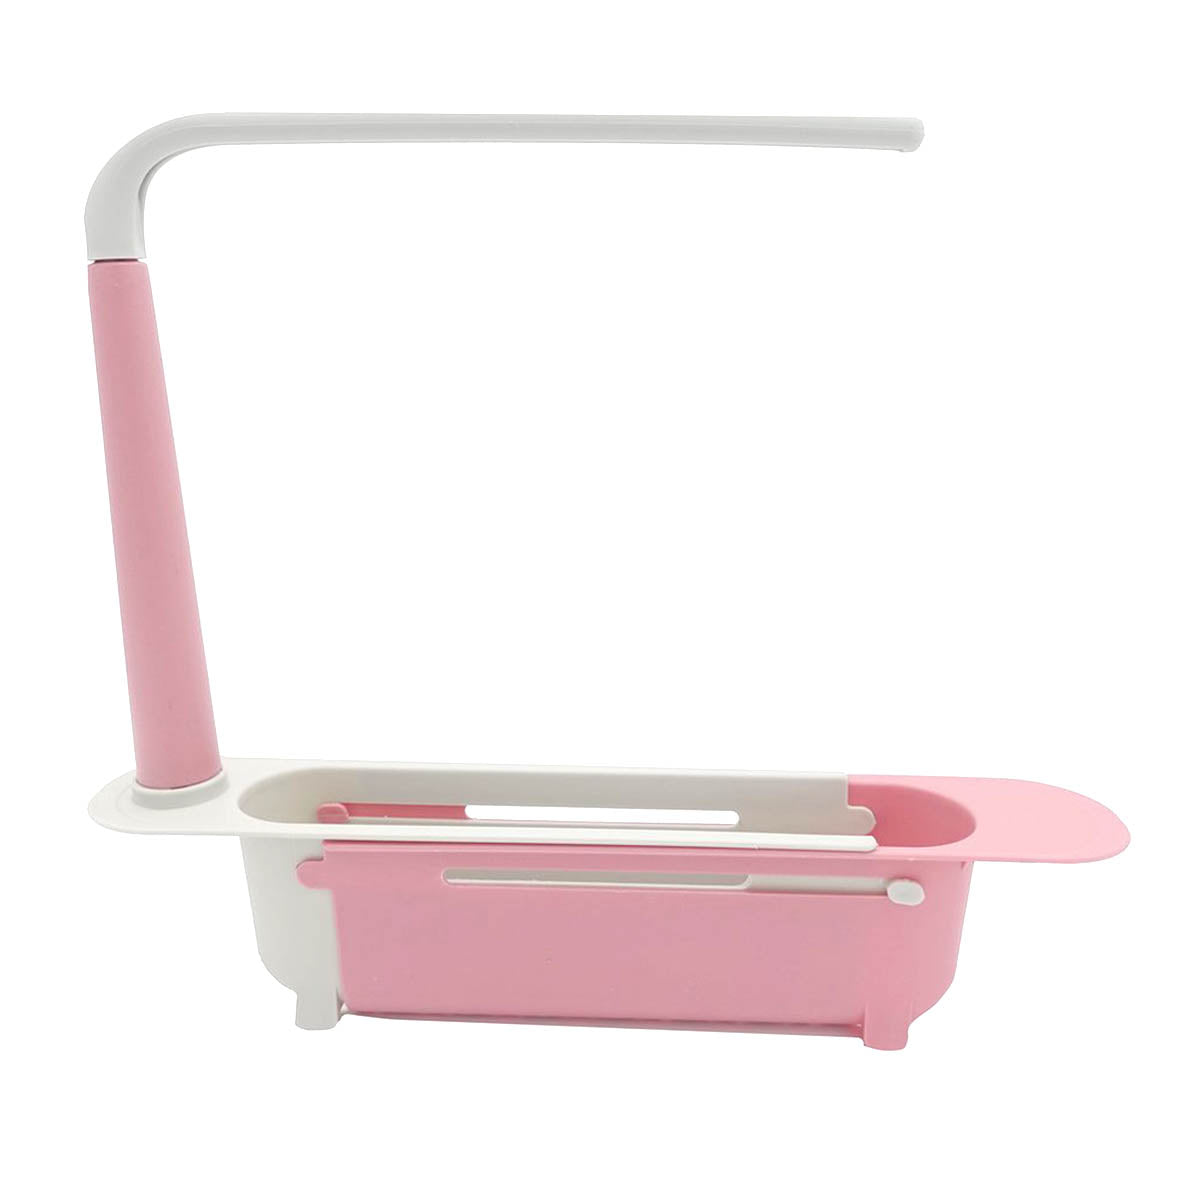 <tc>Ariko</tc> Sink Organizer - Countertop Sink Tray - Dishcloth Holder - Sponge Storage Rack - Adjustable - Pink/Grey